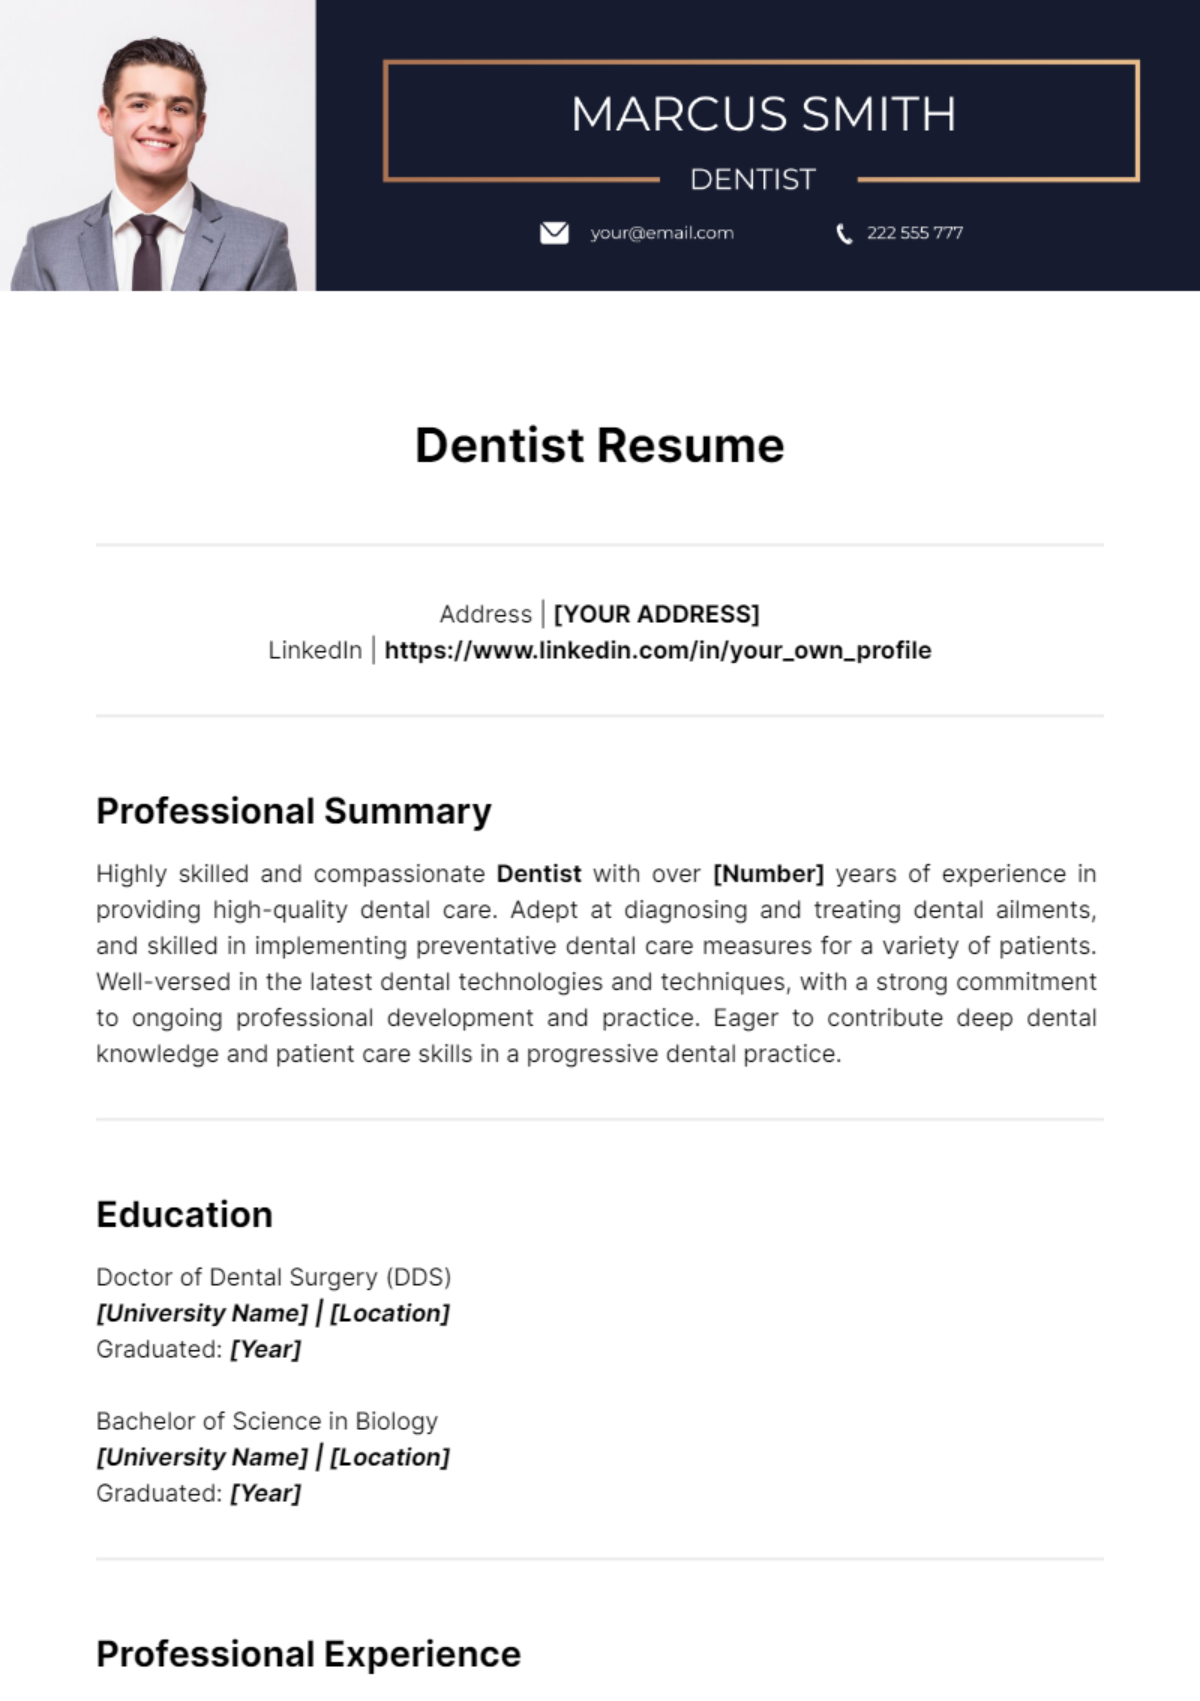 Dentist Resume Template